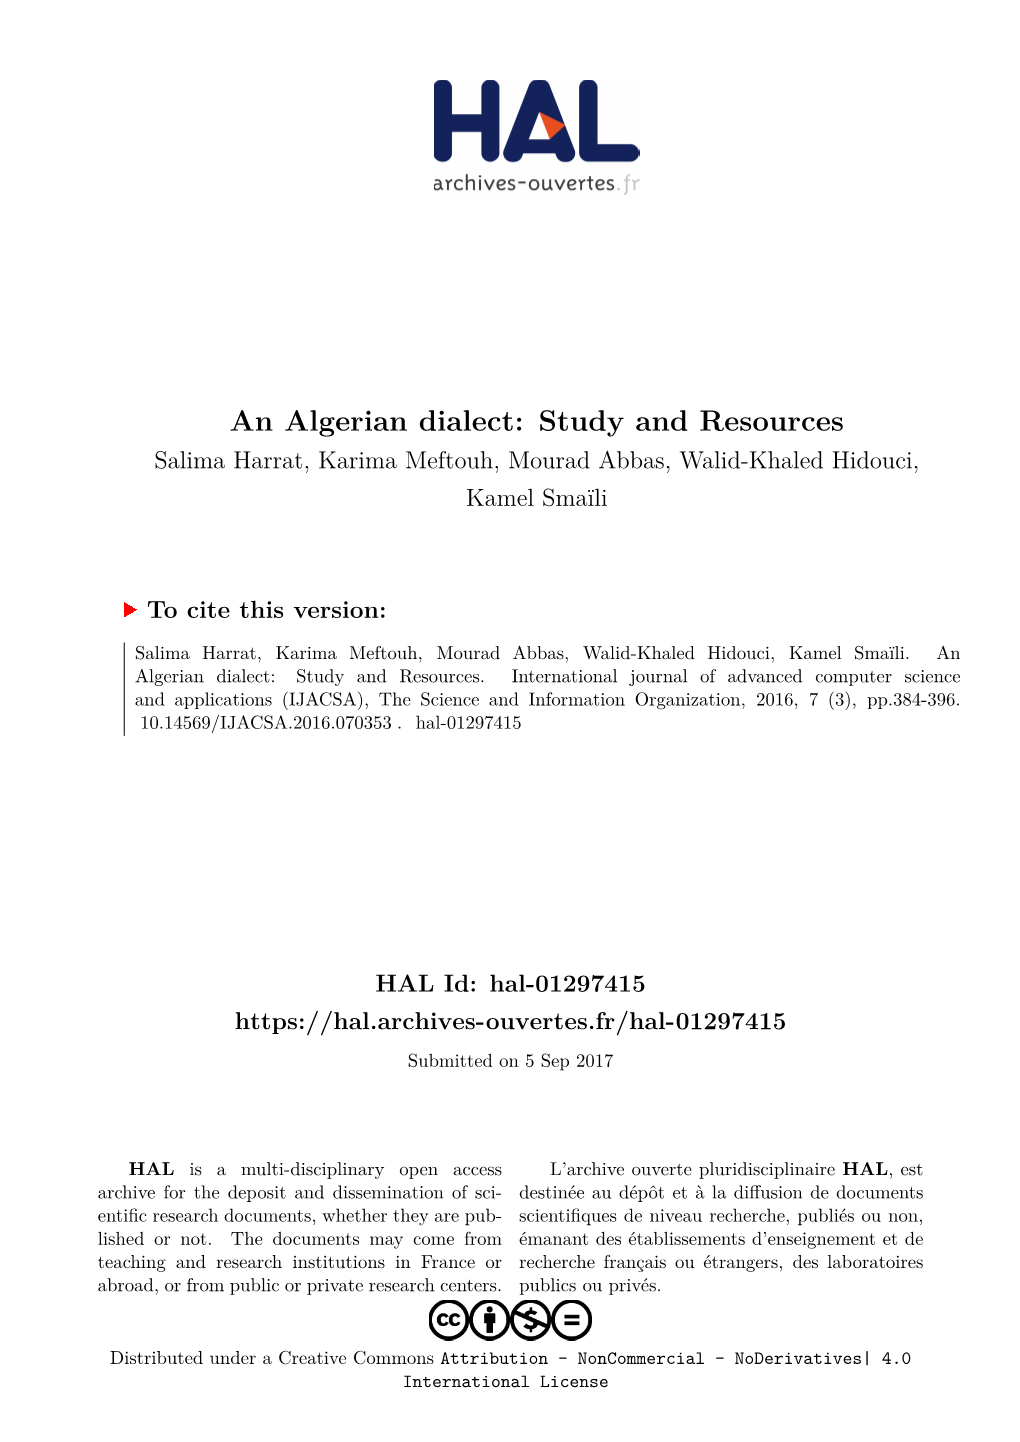 An Algerian Dialect: Study and Resources Salima Harrat, Karima Meftouh, Mourad Abbas, Walid-Khaled Hidouci, Kamel Smaïli